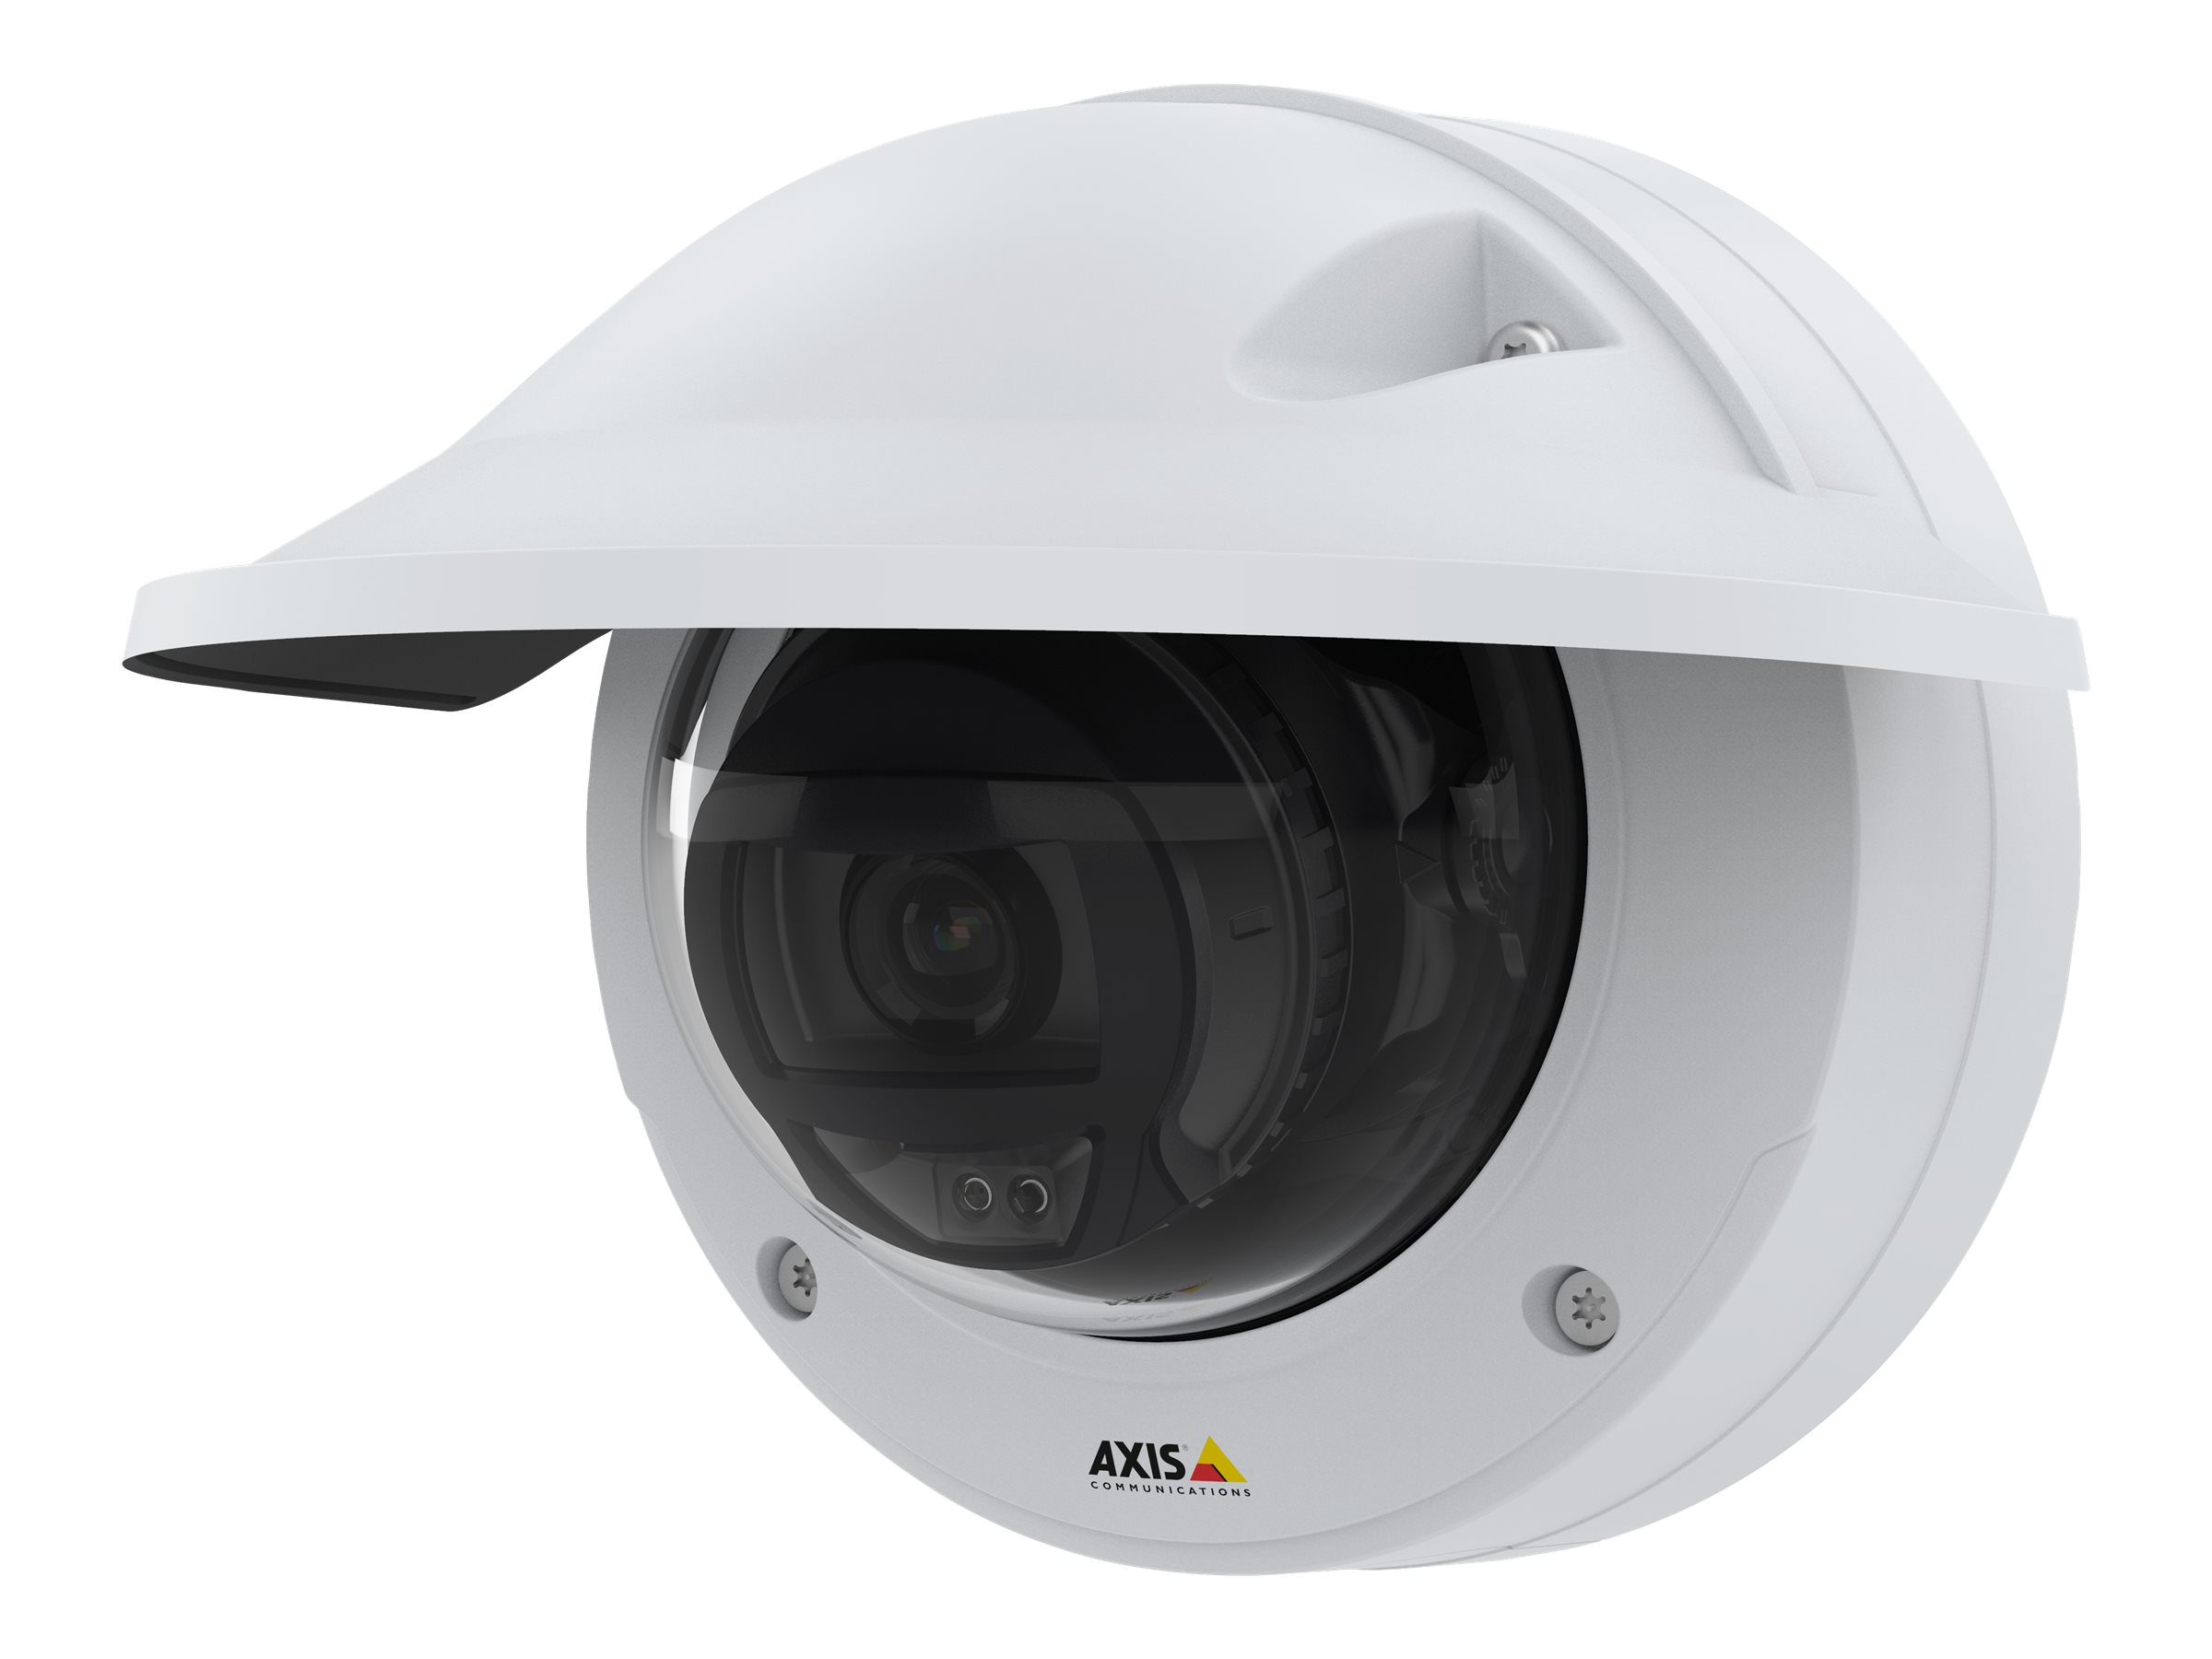 AXIS TP3805 Weathershield - Kamera-Wetterschutzabdeckung (Packung mit 2) - für AXIS AXIS P3245-LVE-3, M3205-LVE, M3206-LVE, P3245-LVE, P3245-VE